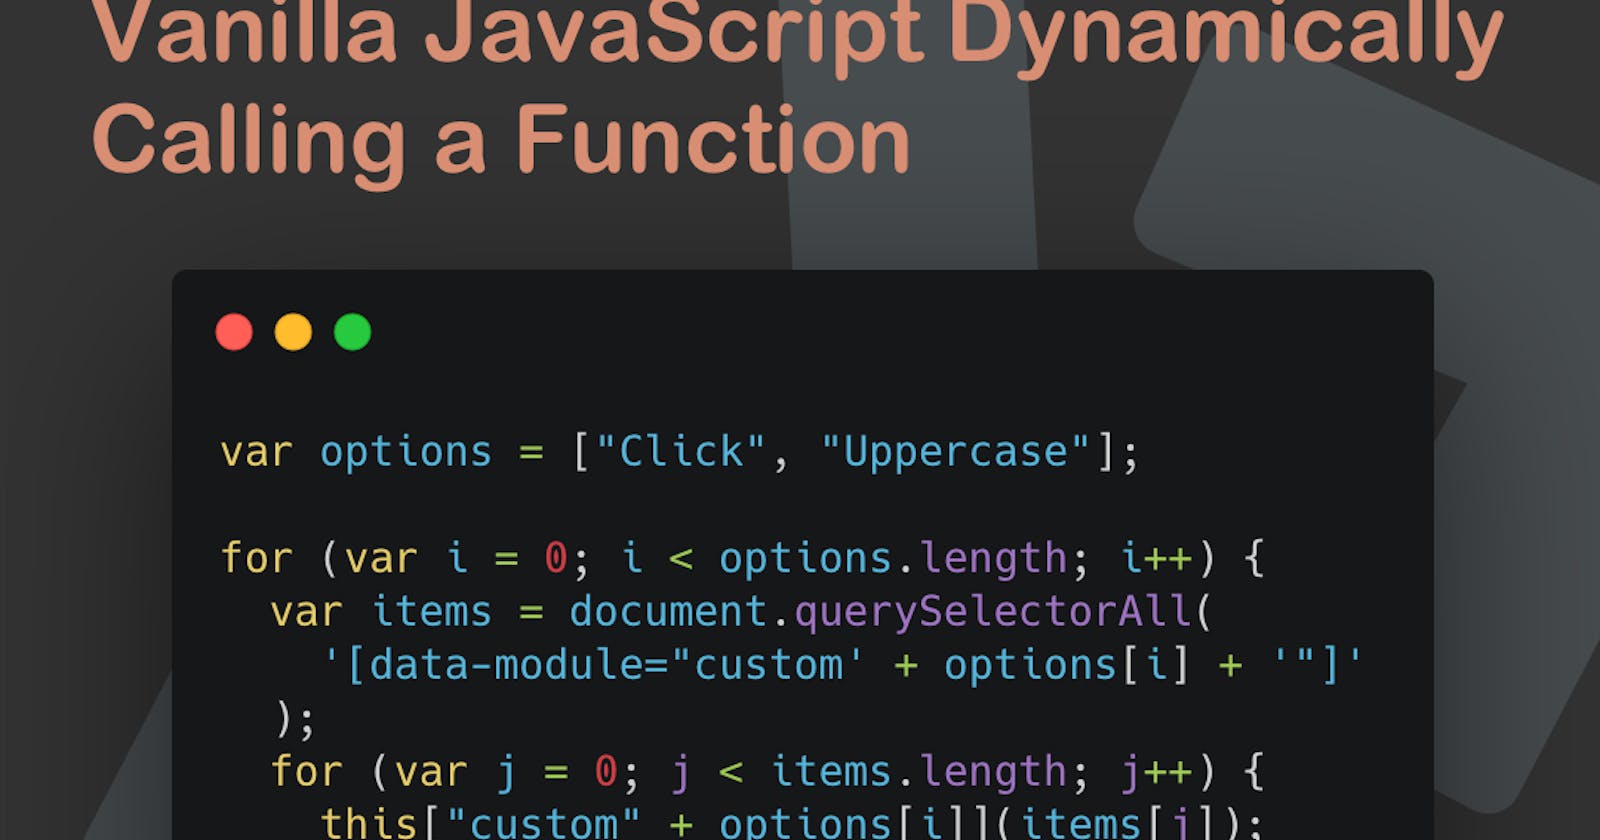 Vanilla JavaScript Dynamically Calling a Function